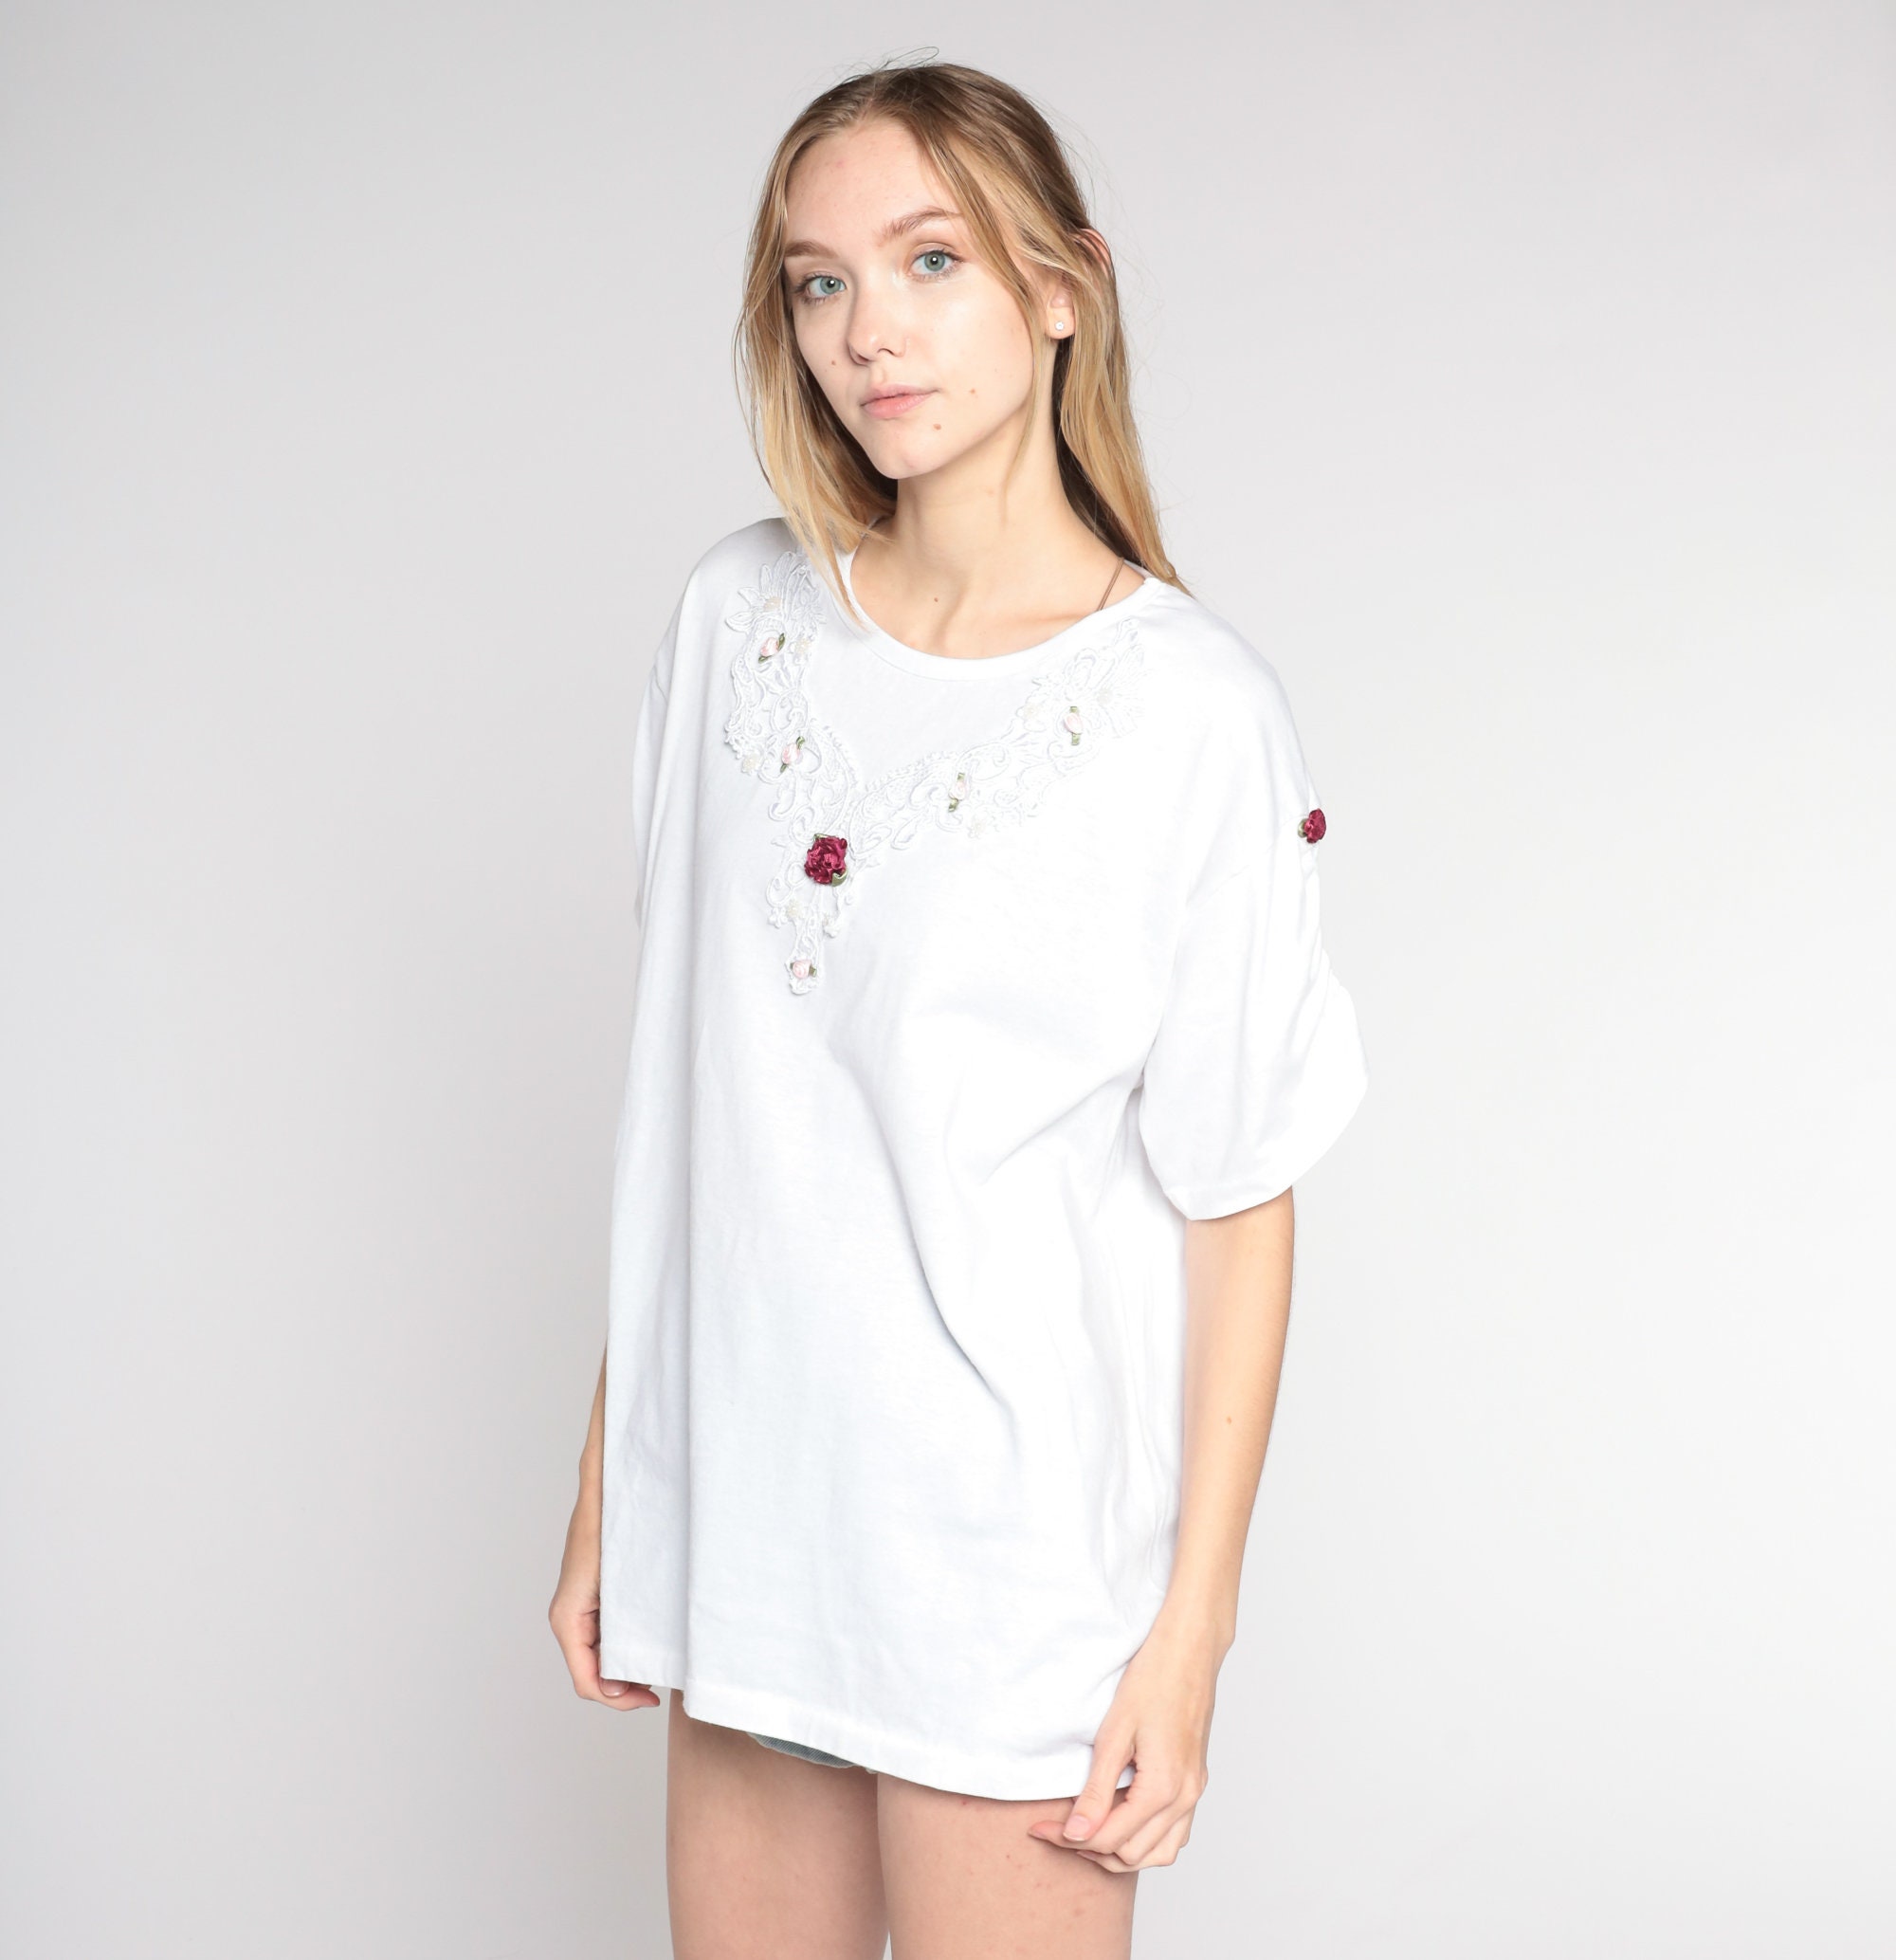 Rosette Shirt 90s White Lace Applique Rose T-Shirt Retro Pearl Beaded ...